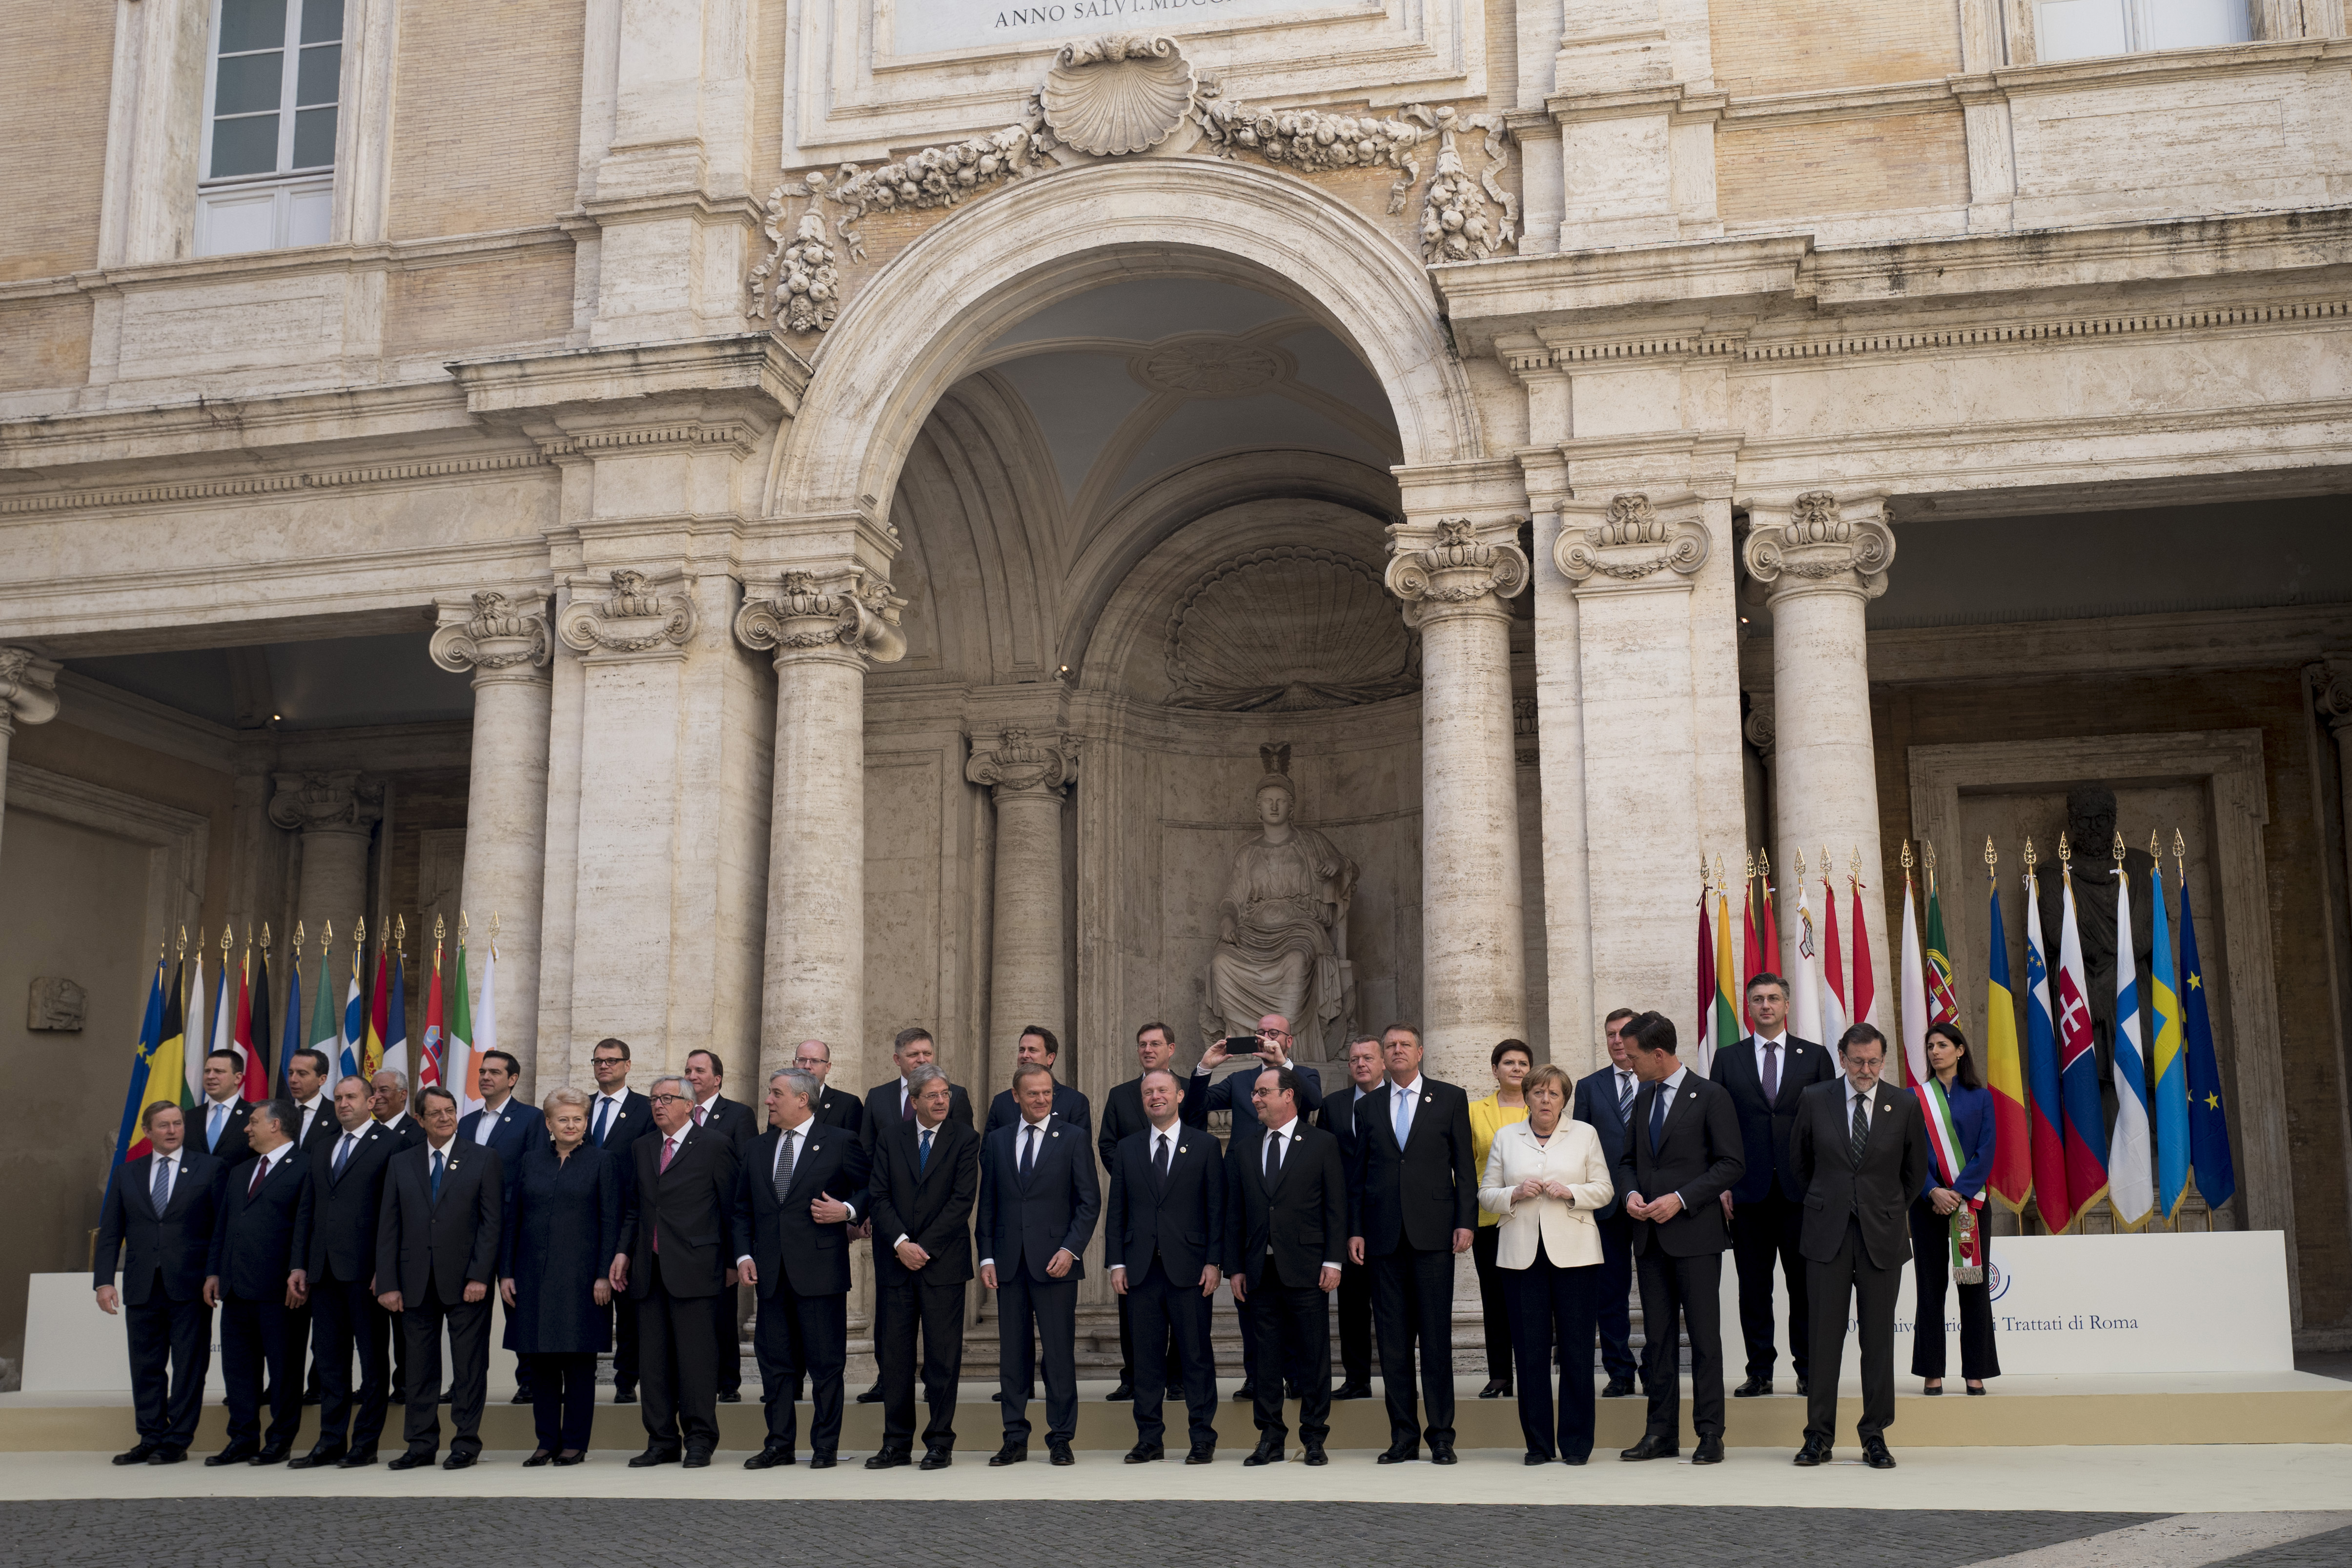 Treaty of Rome anniversary group photograph 2017-03-25 01